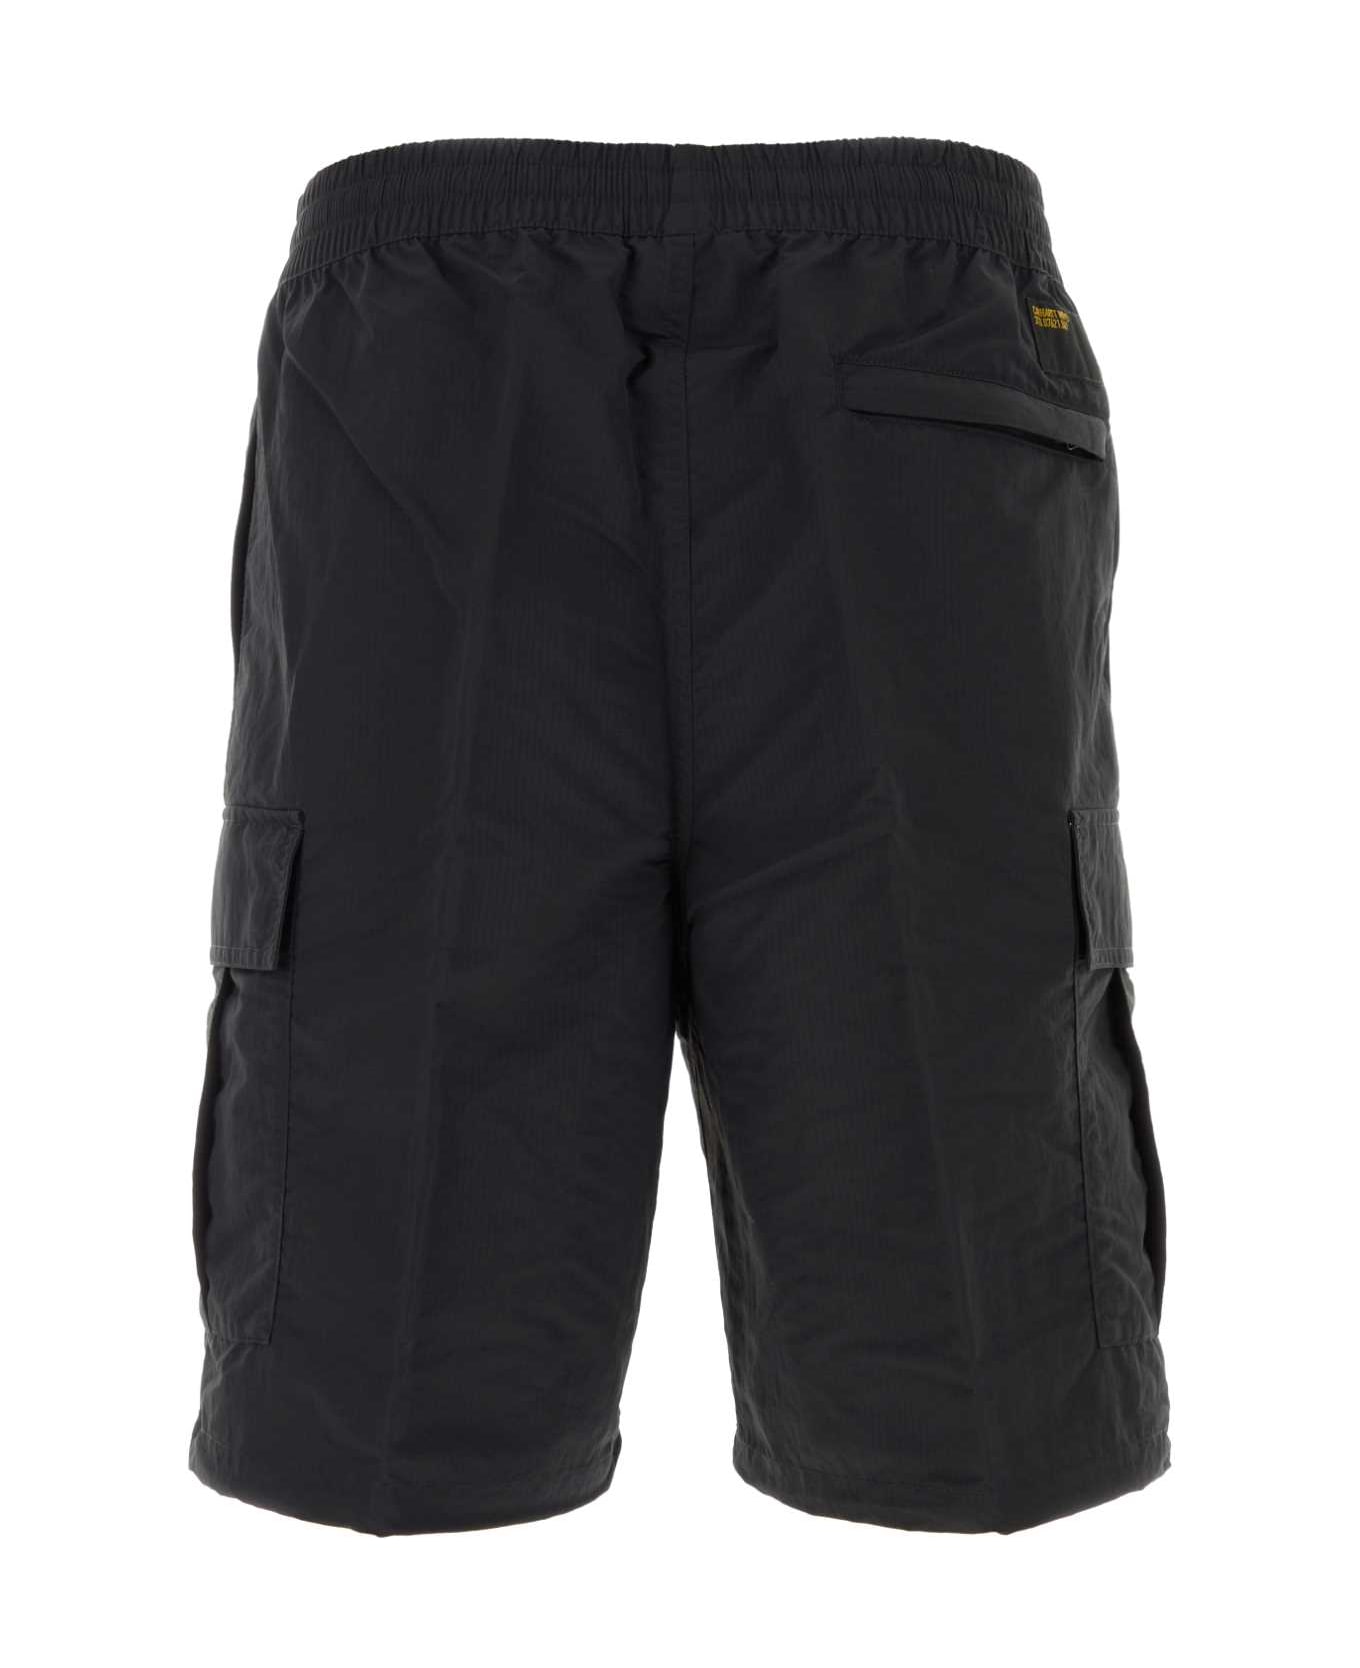 Carhartt Black Nylon Evers Cargo Shorts - ISIMARDINPRIWHI